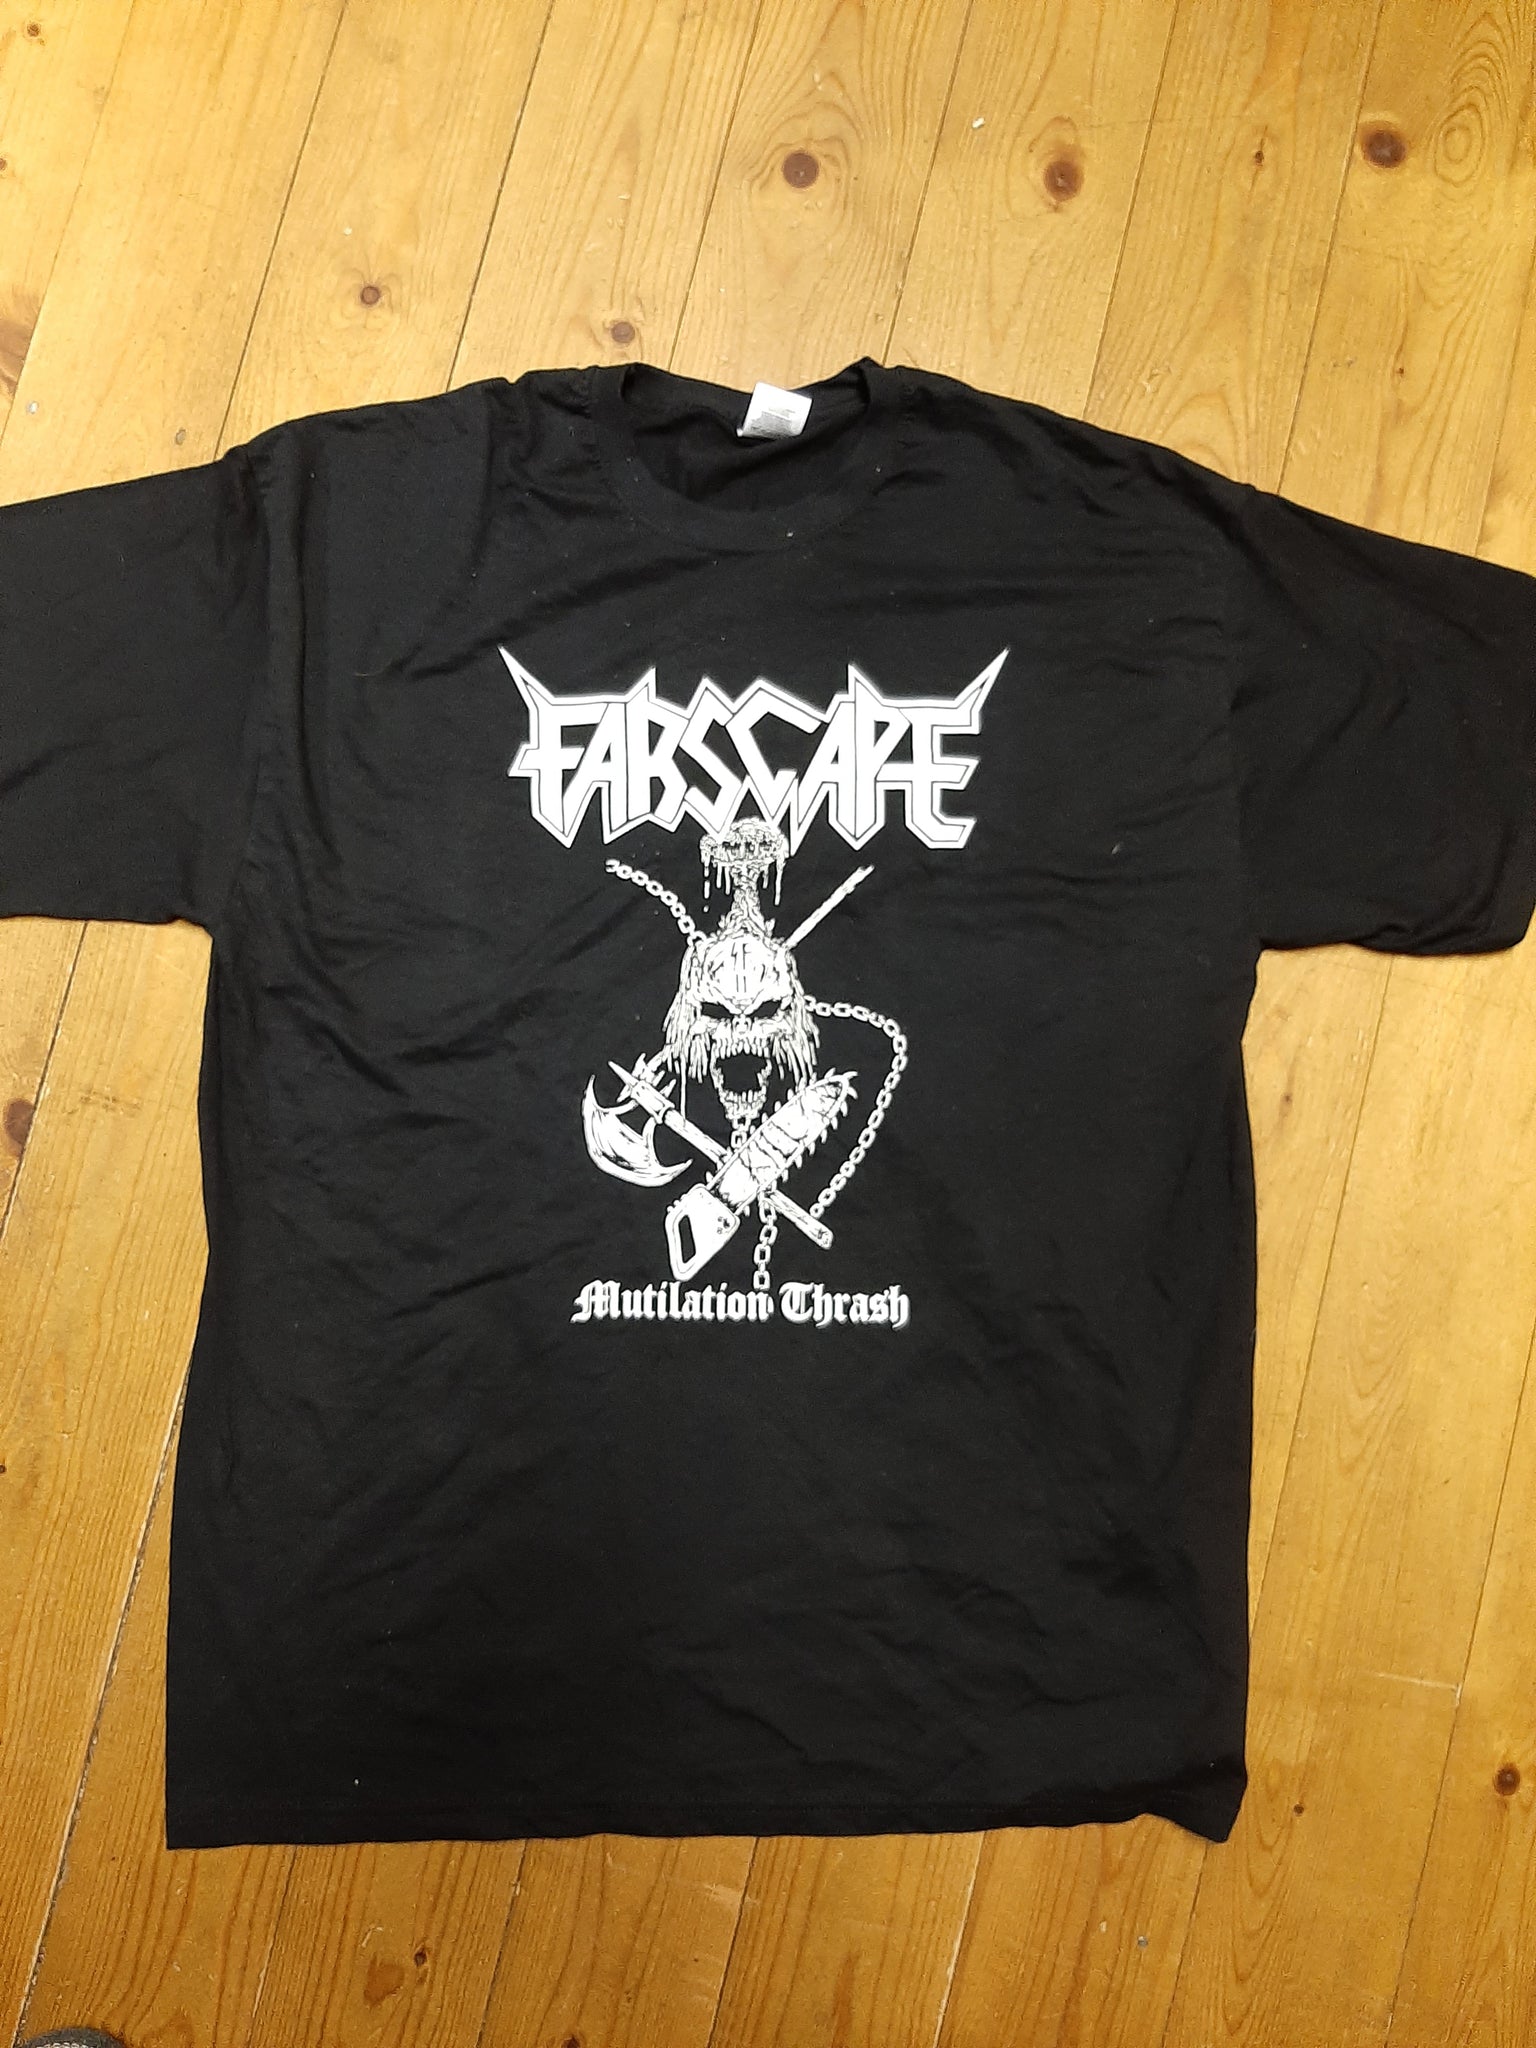 Farscape - Mutilation Thrash - T-Shirt in XL